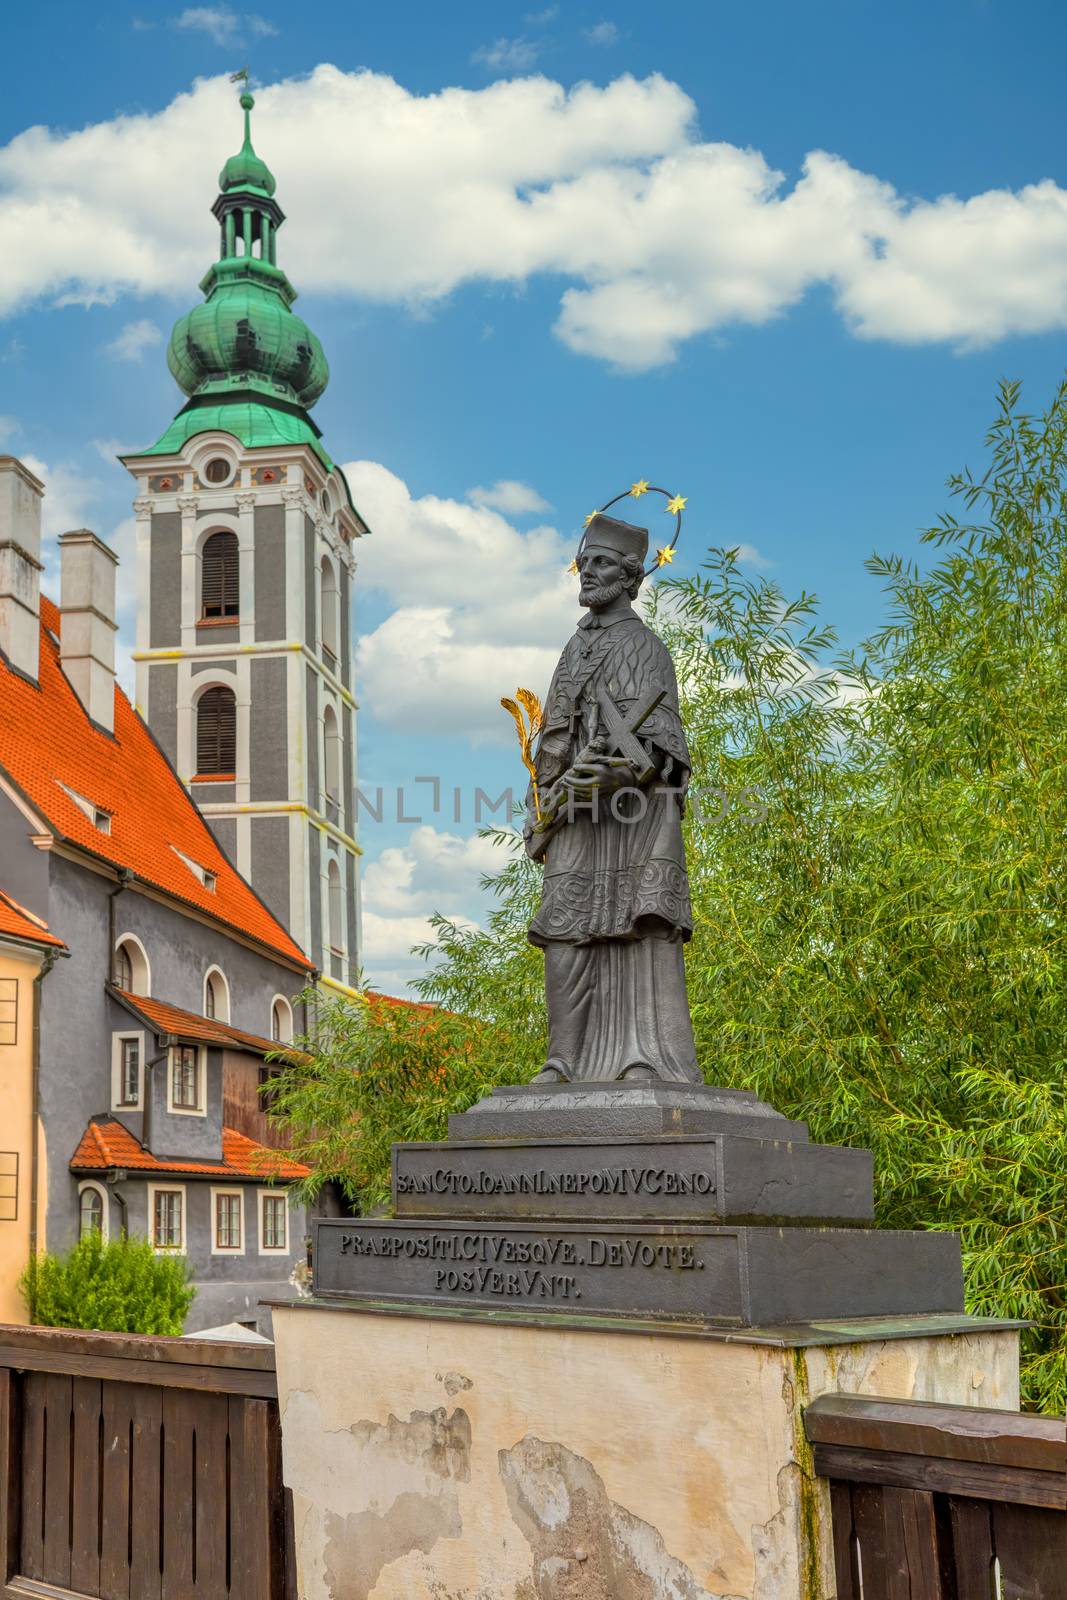 Statue of St. John Nepomuk in the town center of Cesky Krumlov